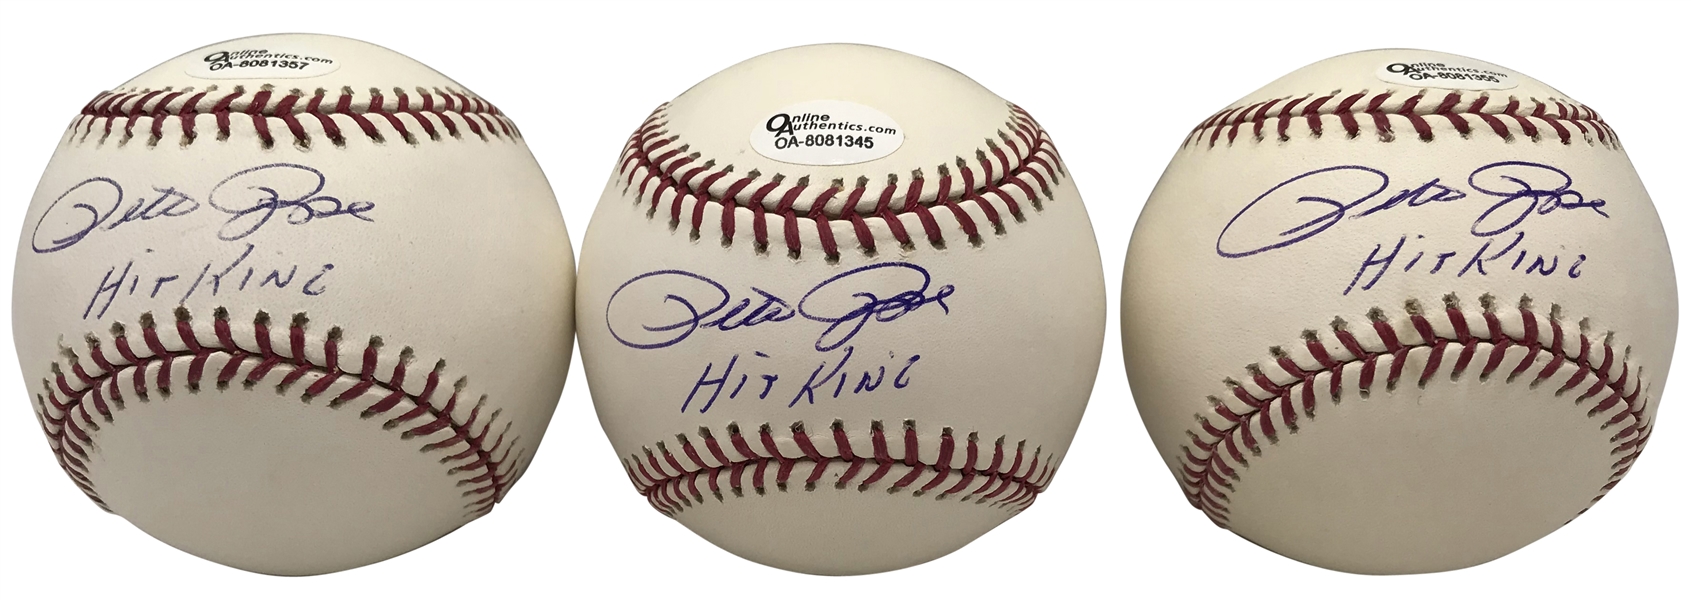 Pete Rose Lot of Three (3) Signed & Inscribed "Hit King" OML Baseballs (Beckett/BAS Guaranteed)